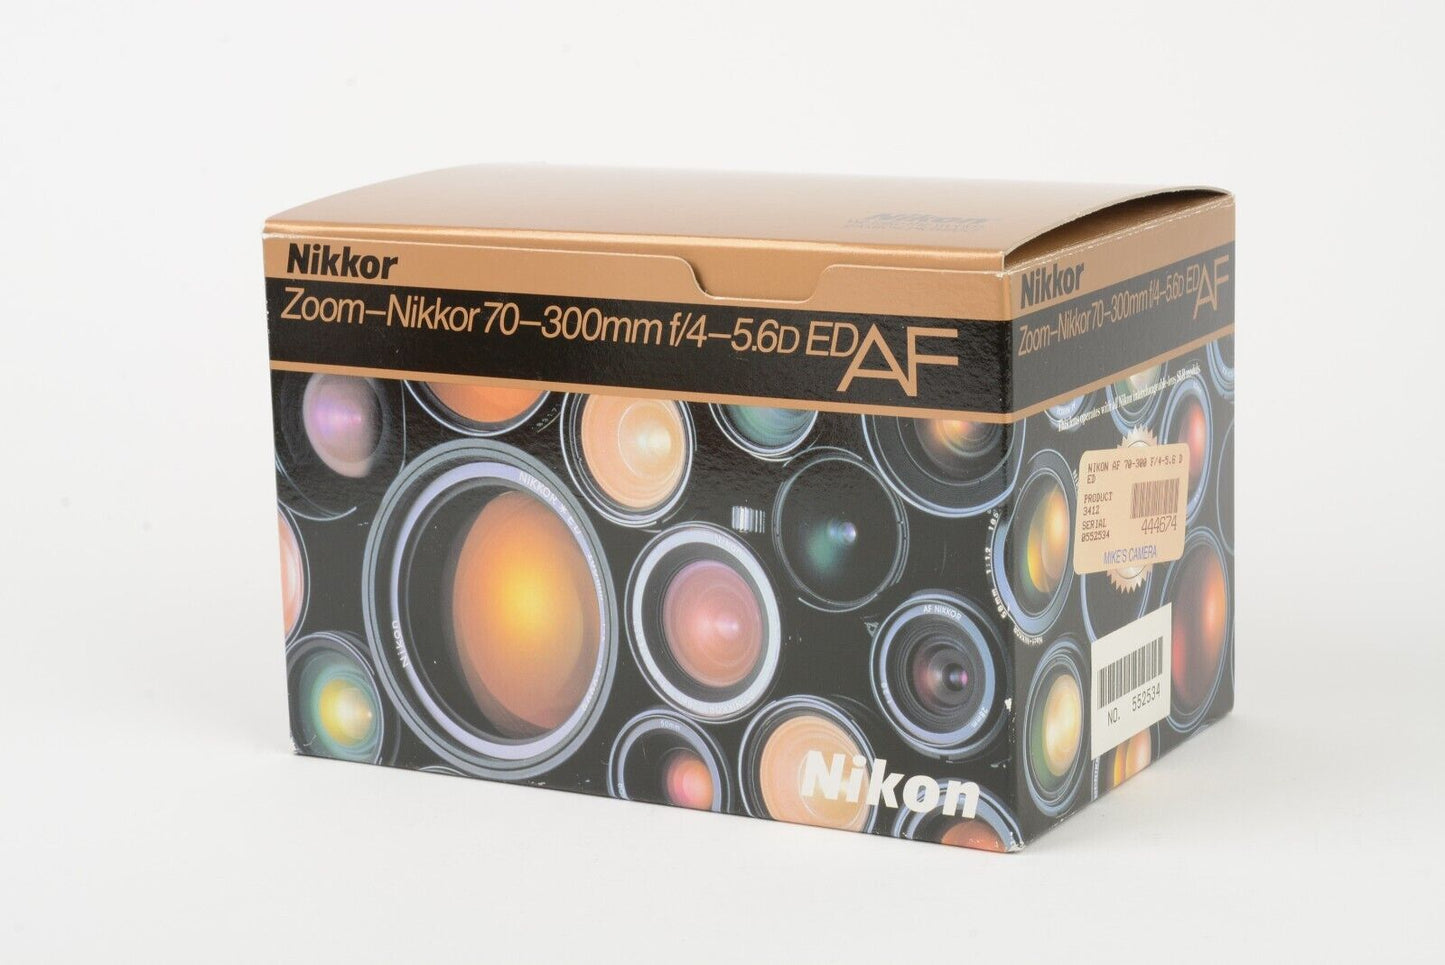 MINT NIKON NIKKOR AF 70-300mm f4-5.6D ED ZOOM LENS, CAPS, HOOD, BOXED, MANUALS